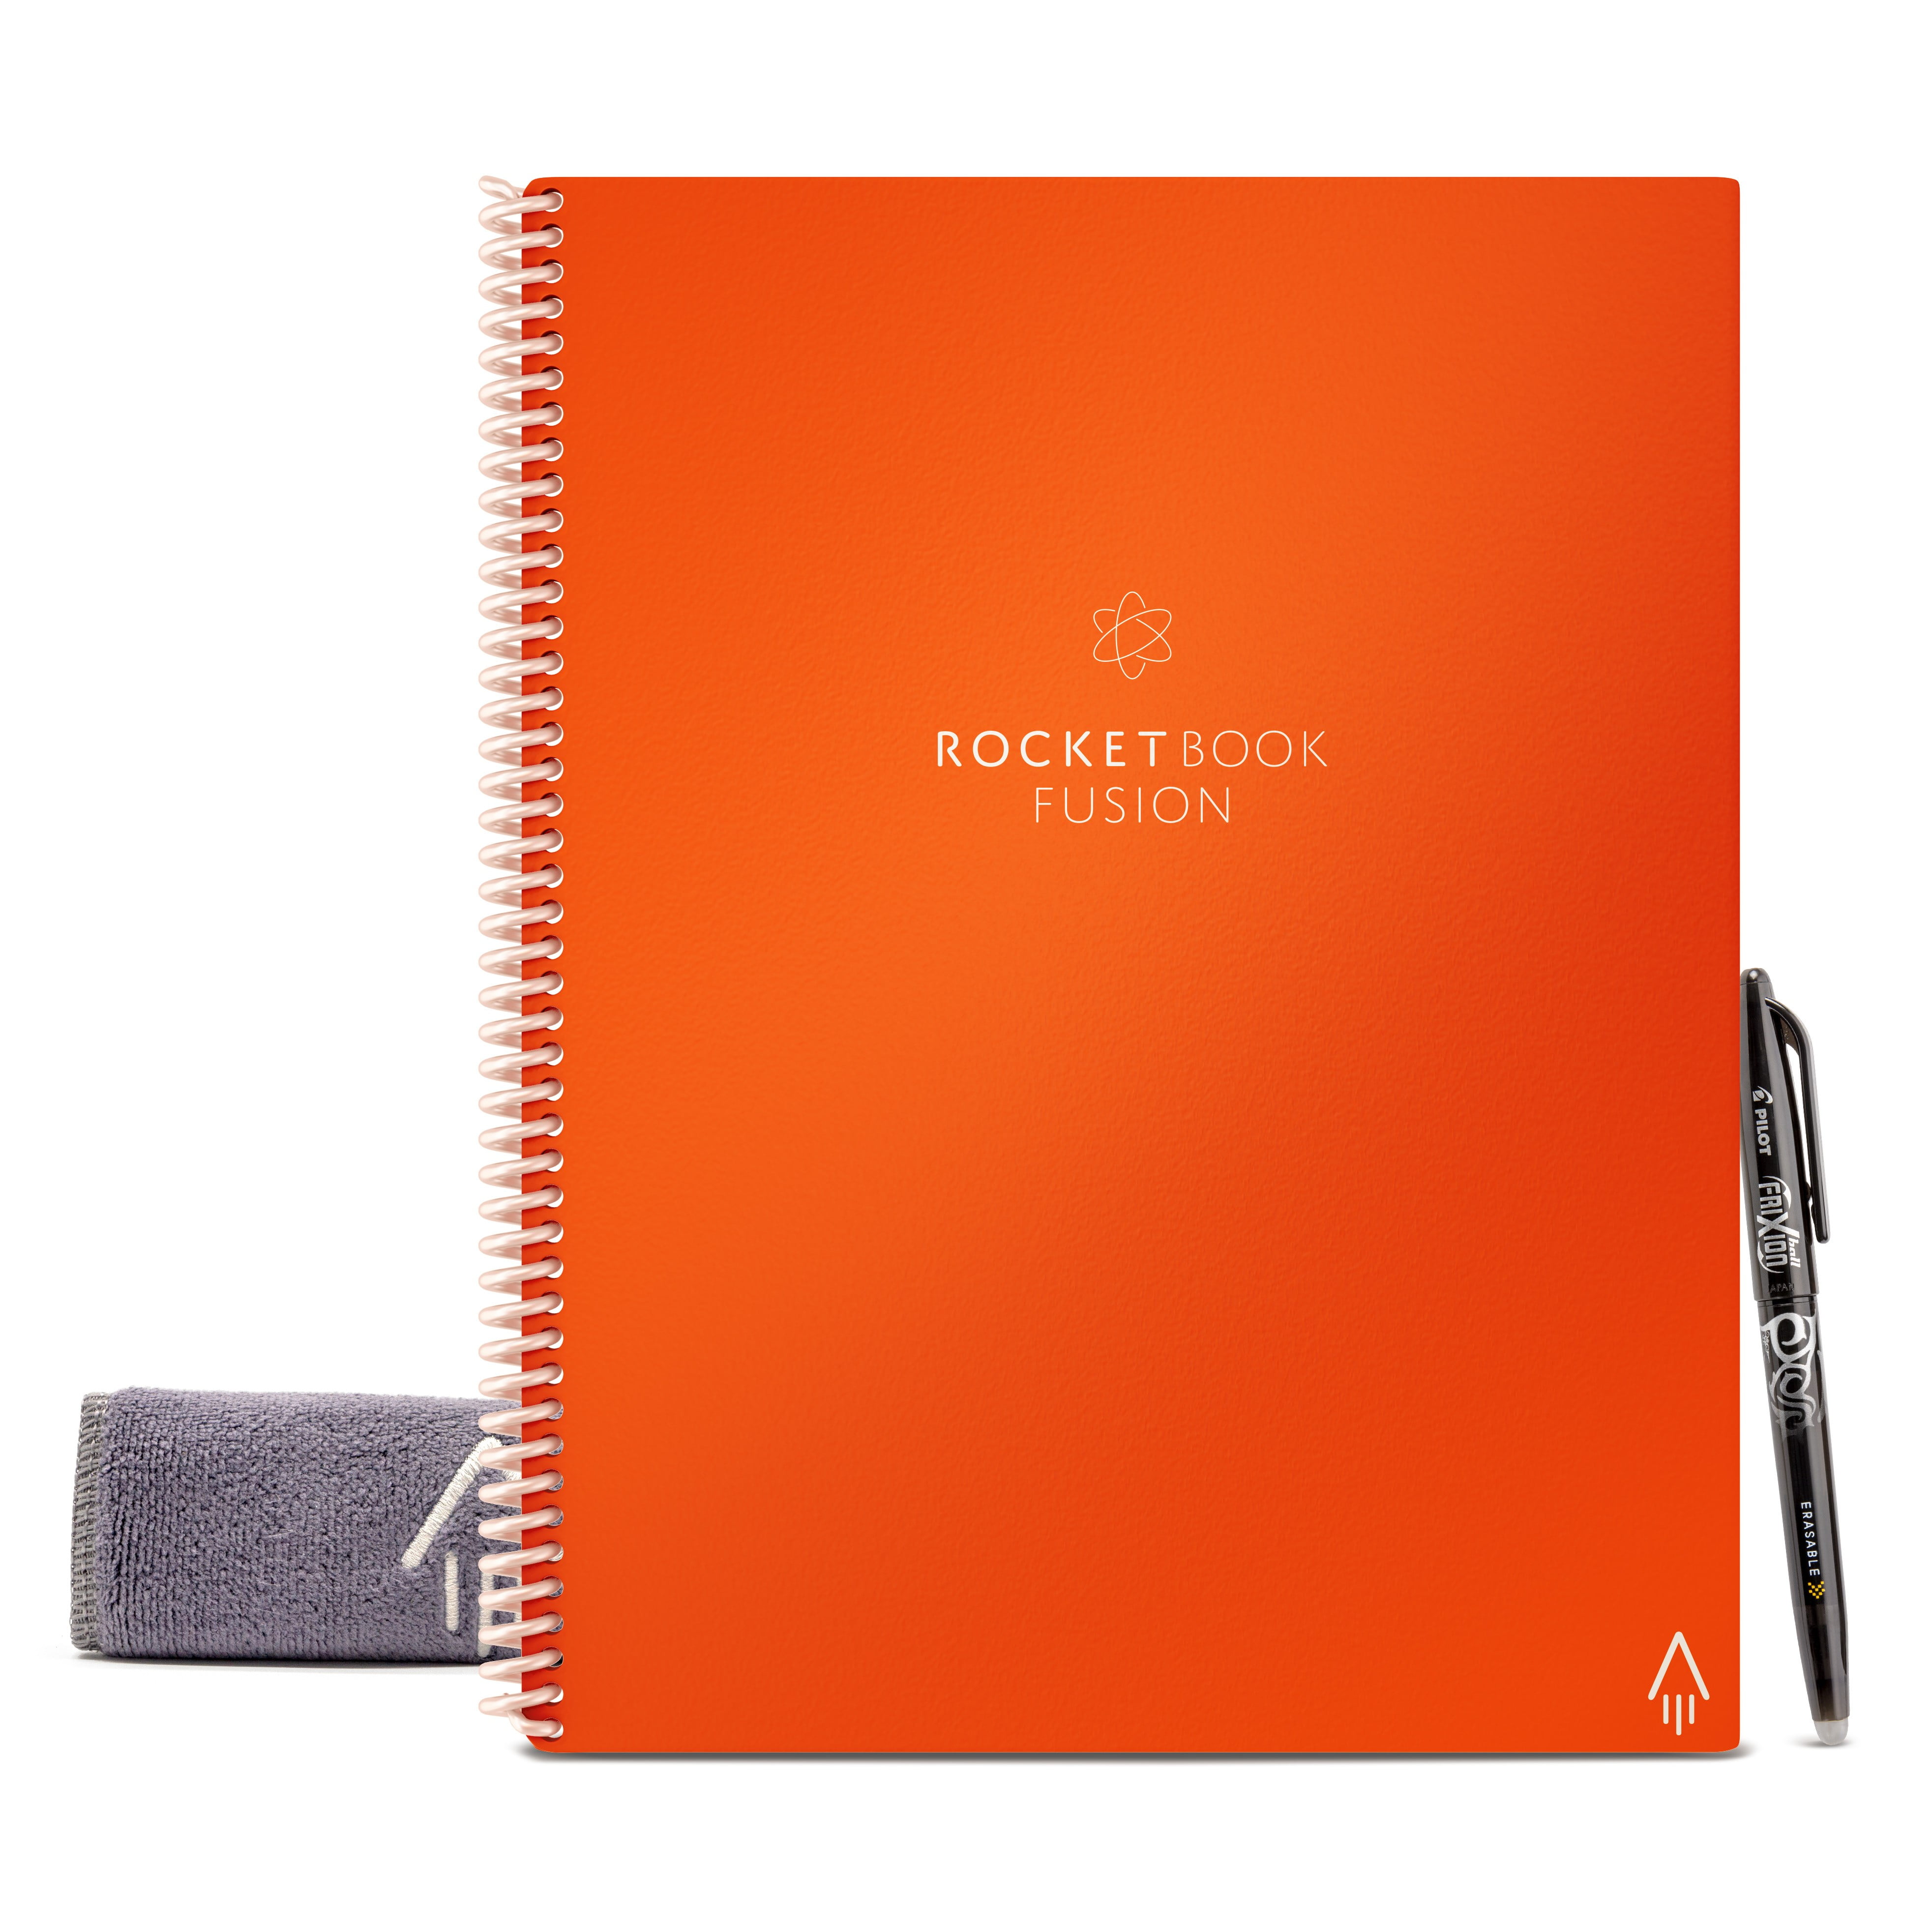 Rocketbook Fusion Smart Notebook Black Cover 8.8 x 6 21 Sheets EVRFERCAFR